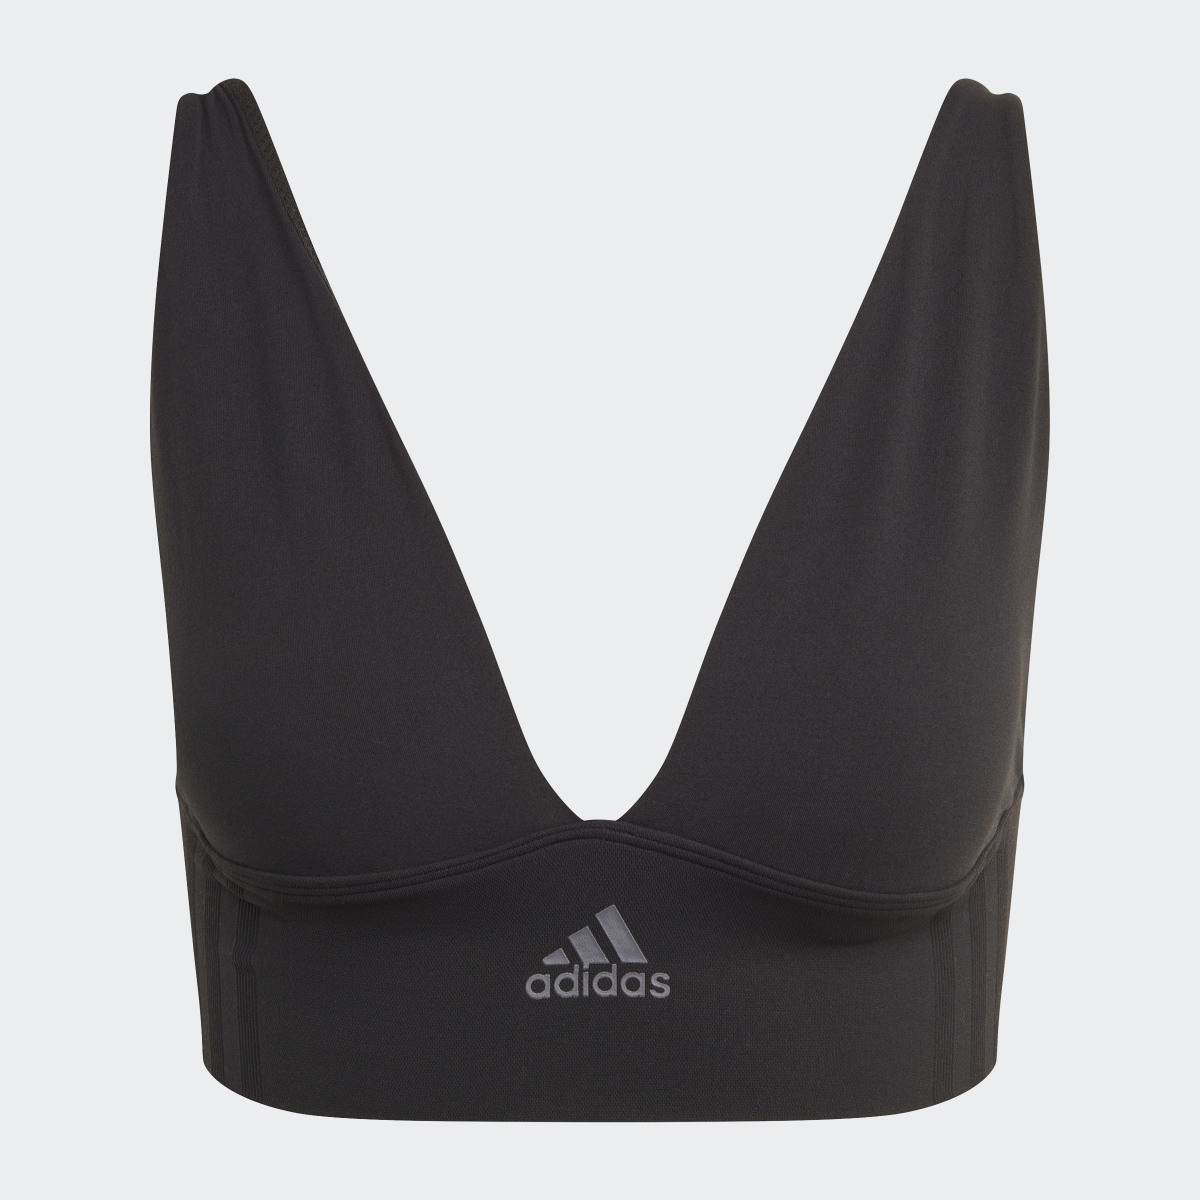 Adidas Active Seamless Micro Stretch Long Line Plunge Bra Underwear. 5